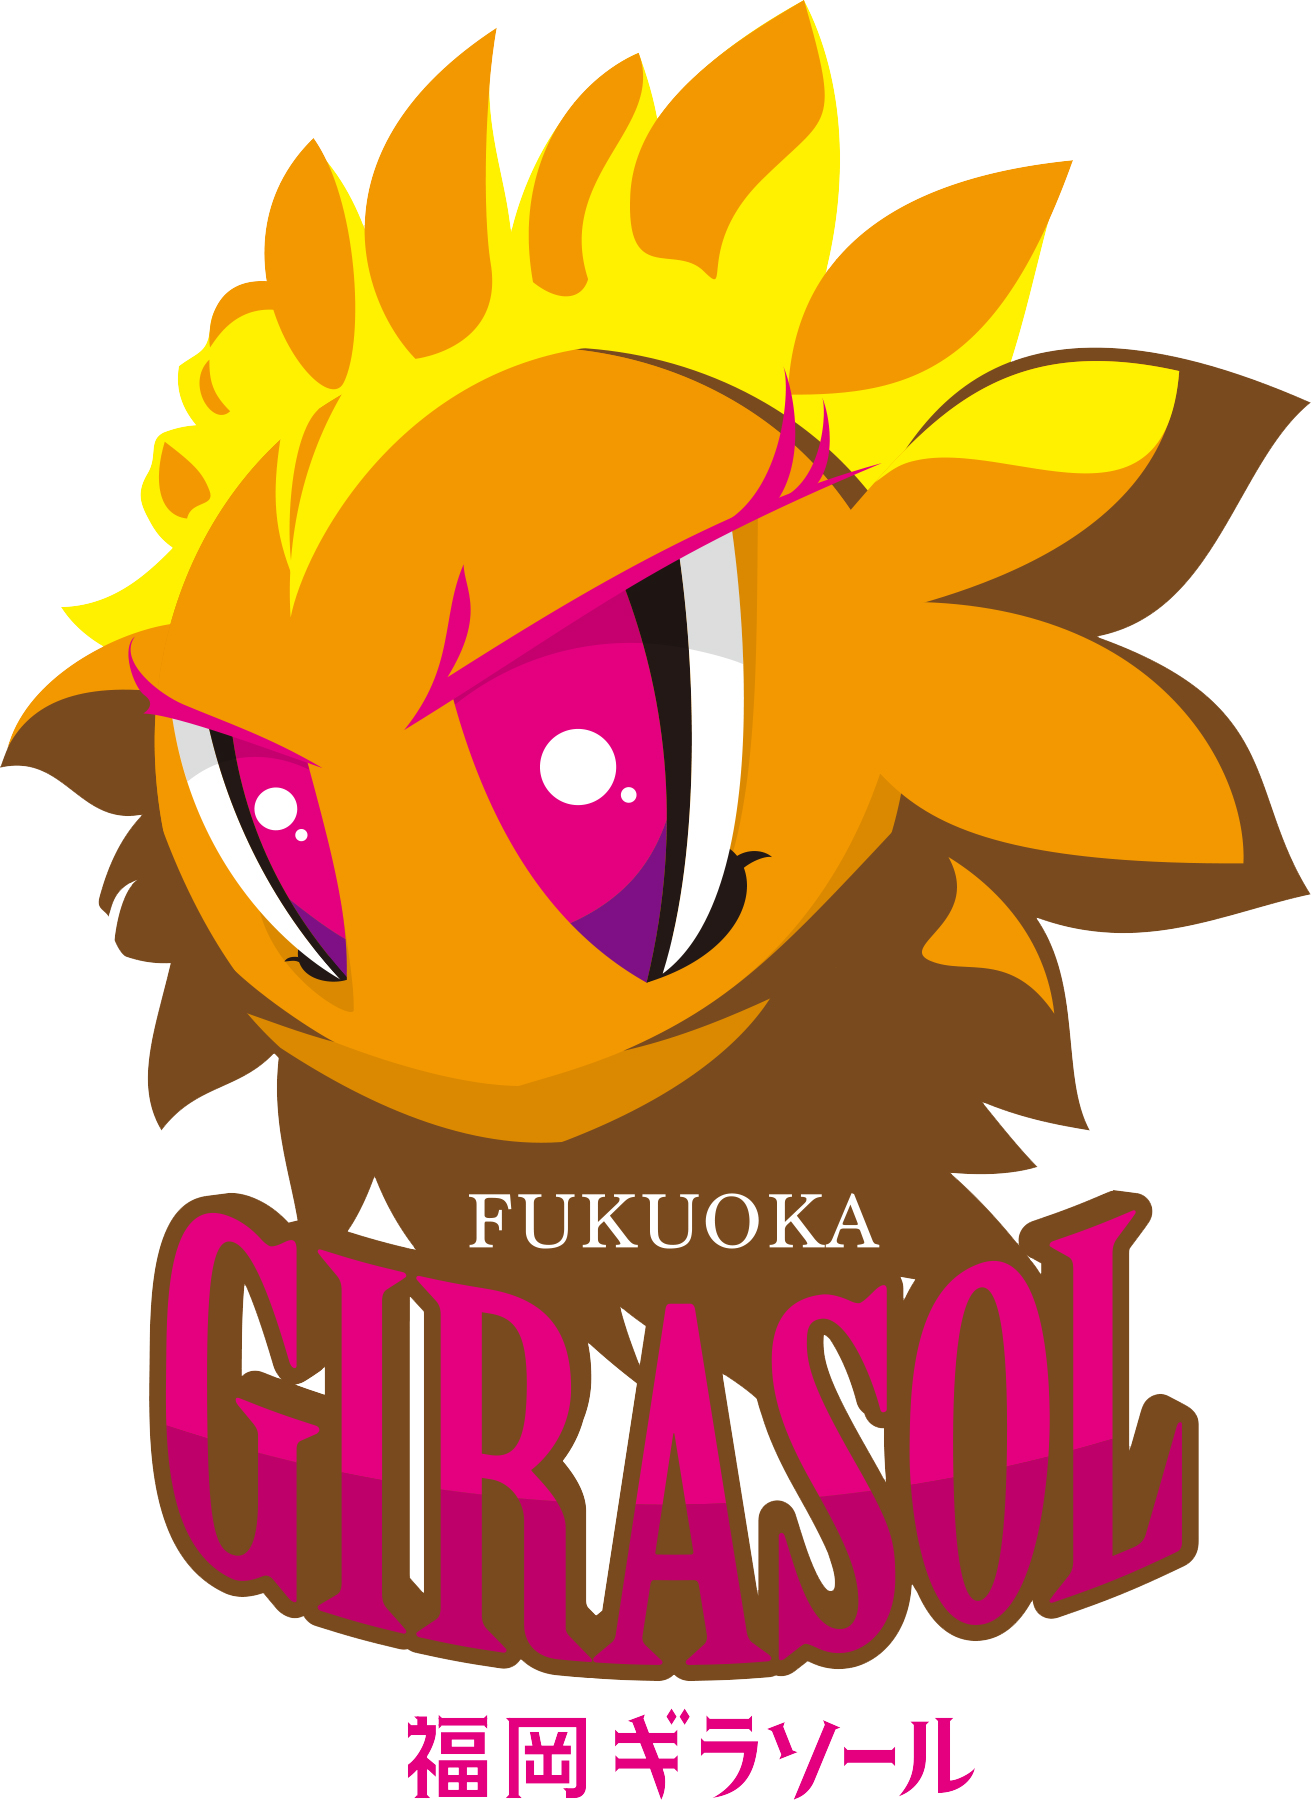 FUKUOKA GIRASOL